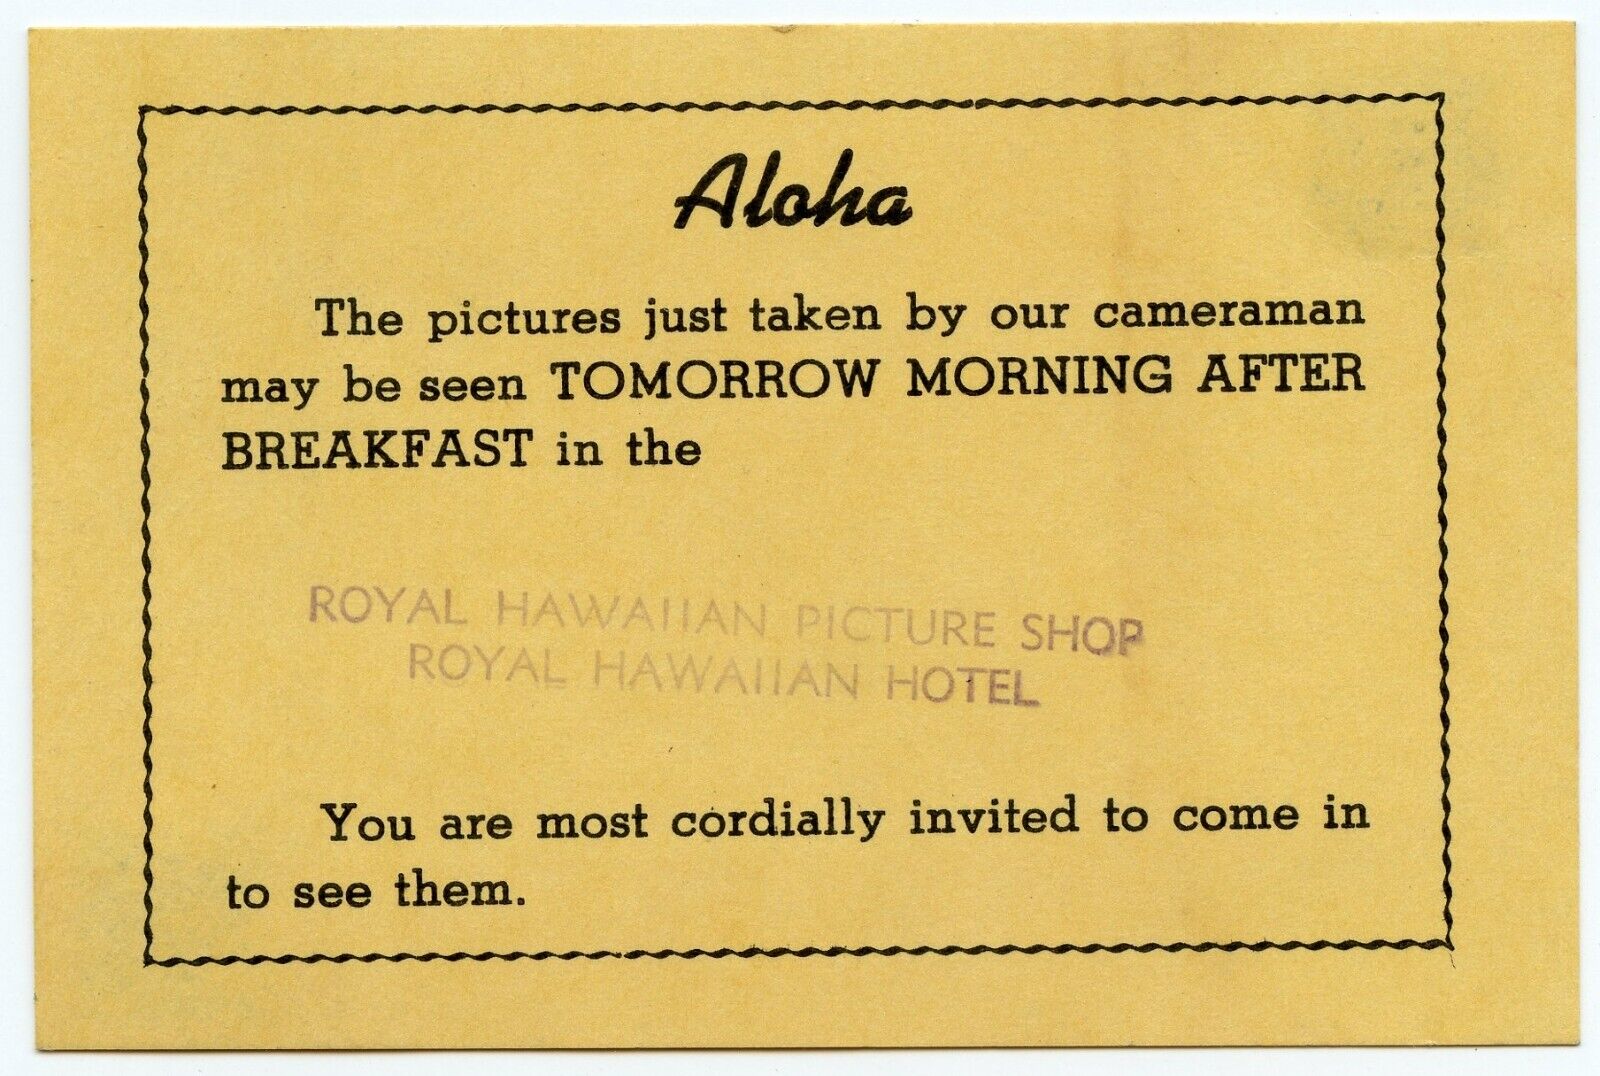 Vintage 1960 Royal Hawaiian Hotel Picture Shop Invitation Card Waikiki